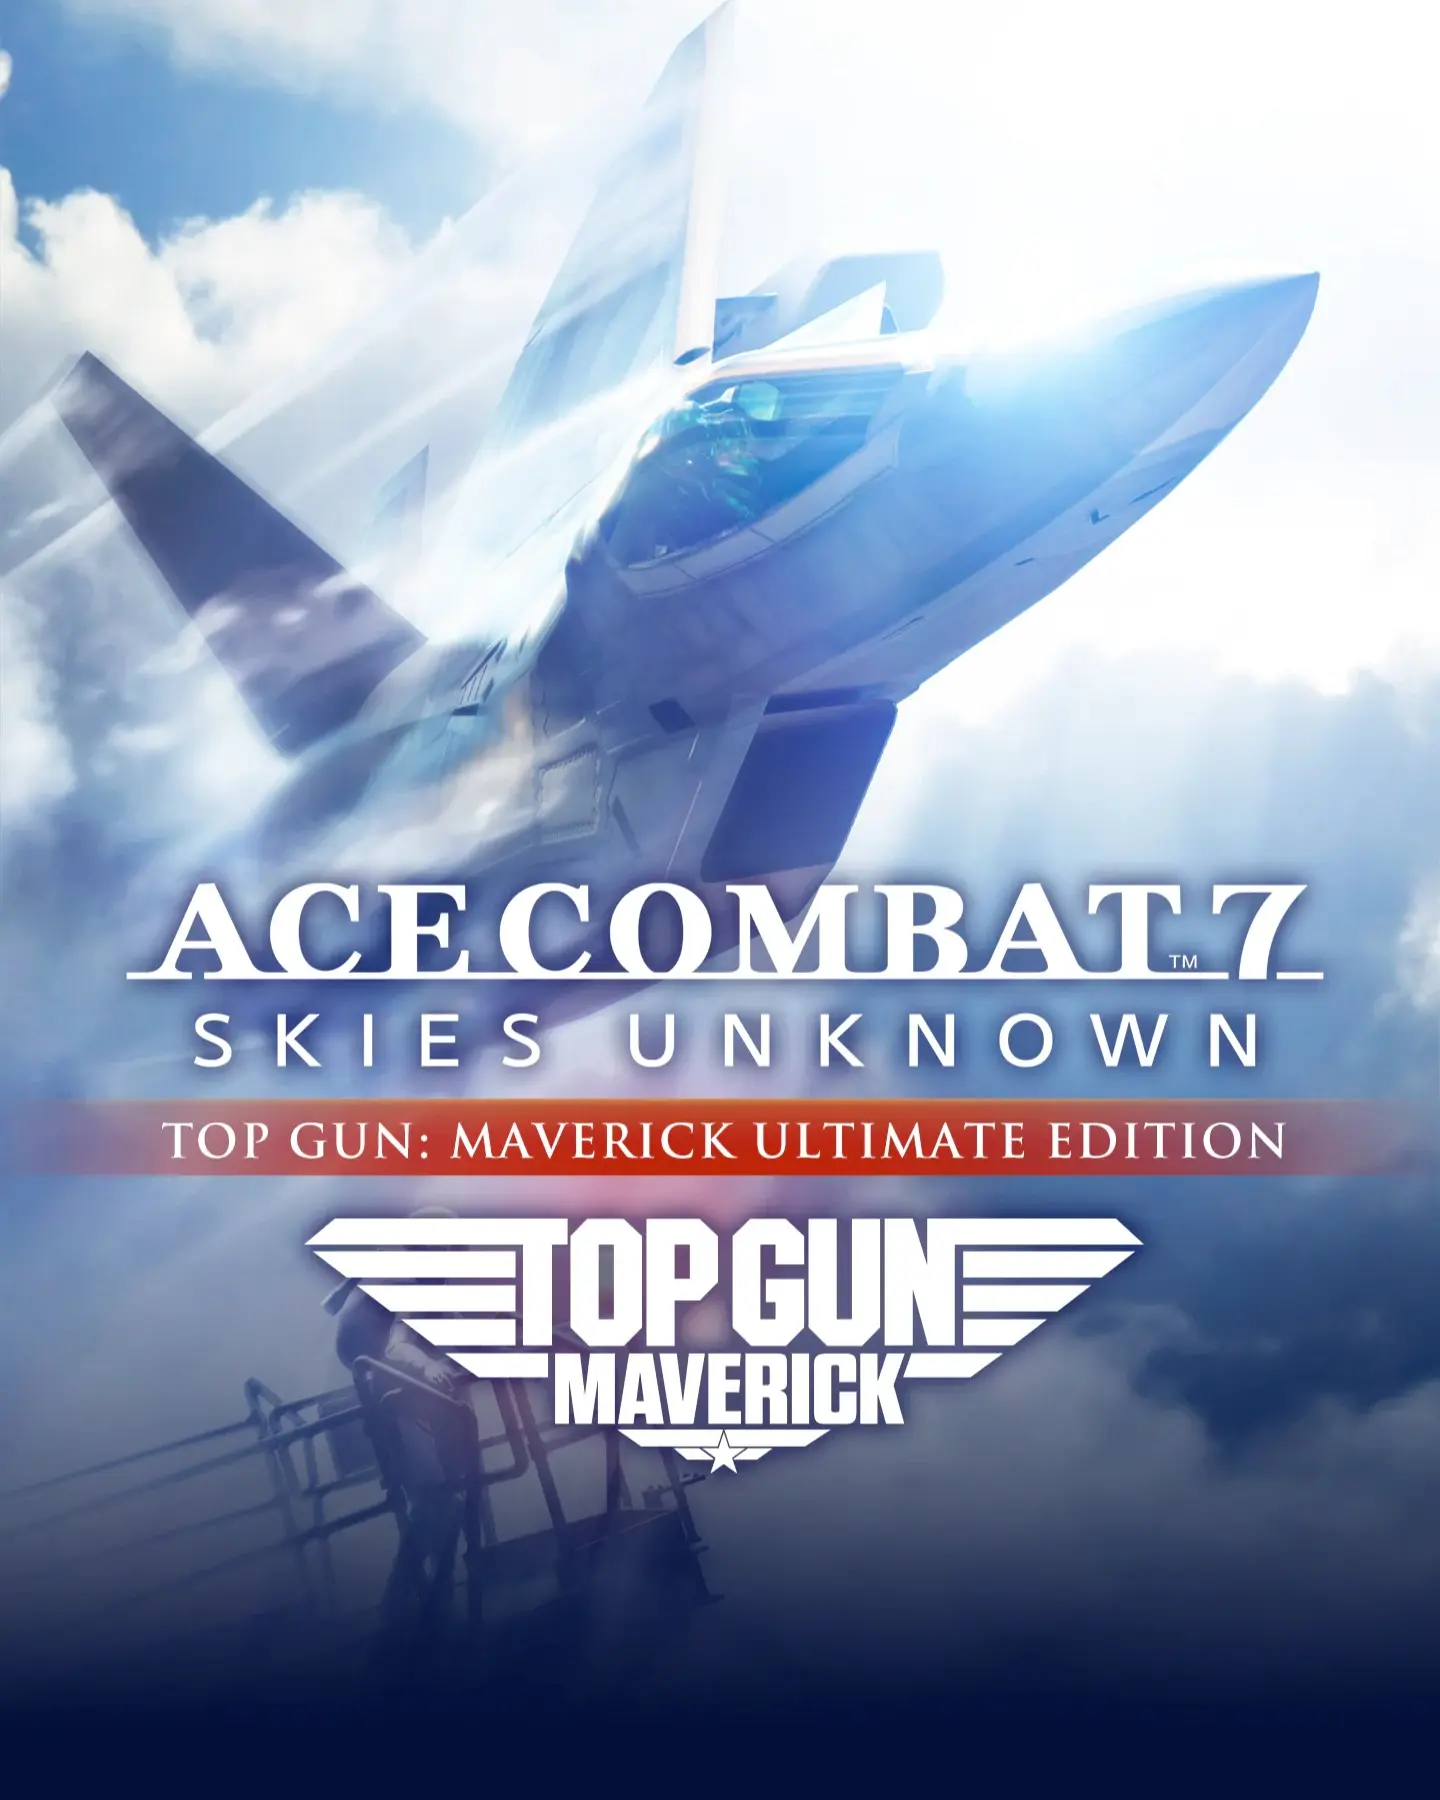 Ace Combat 7: Skies Unknown Top Gun Maverick Ultimate Edition (AR) (Xbox One / Xbox Series X|S) - Xbox Live - Digital Code